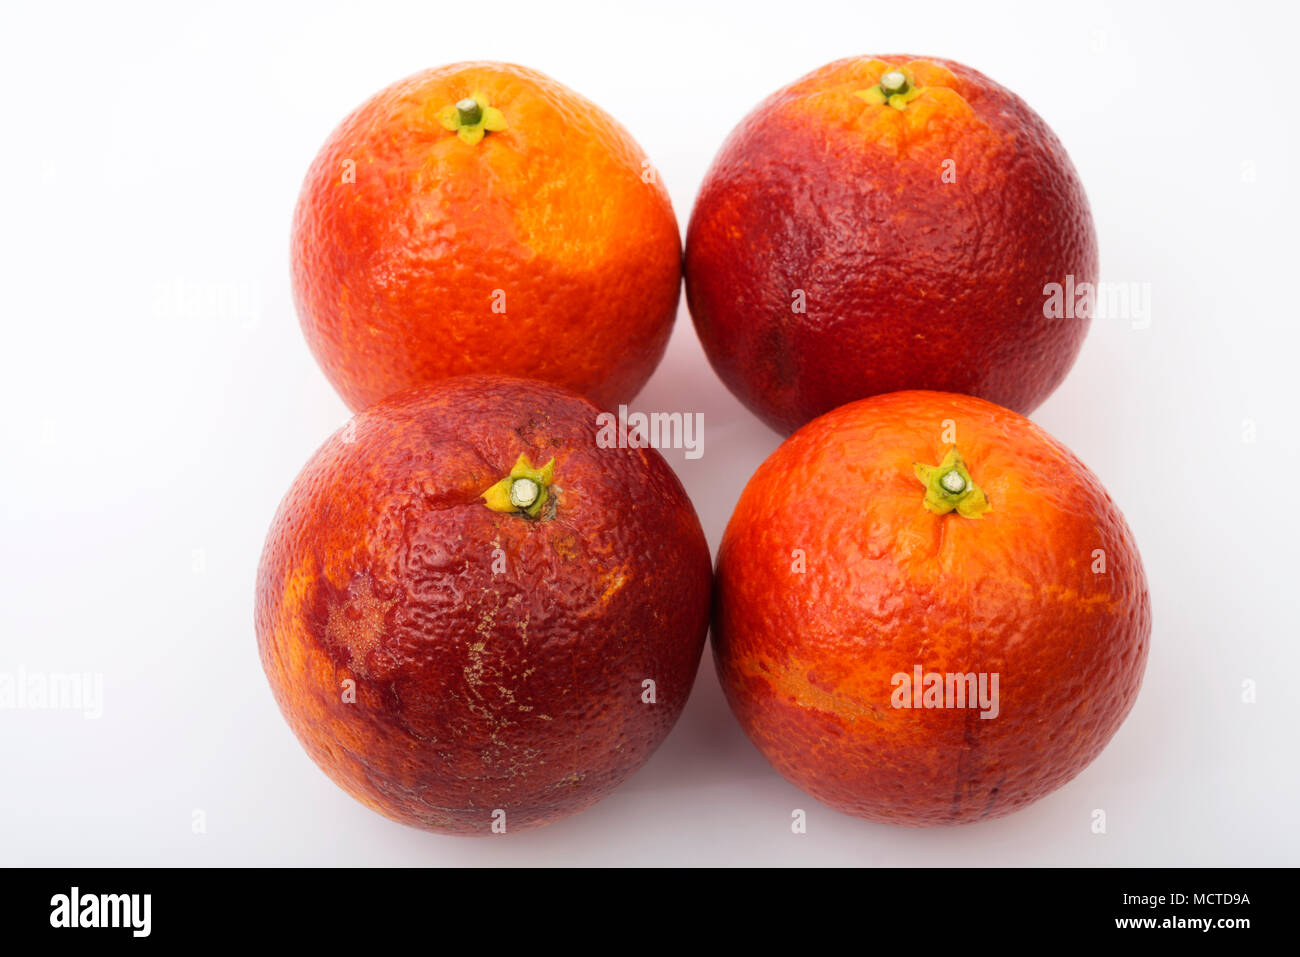 Ippolito oranges from Waitrose Stock Photo